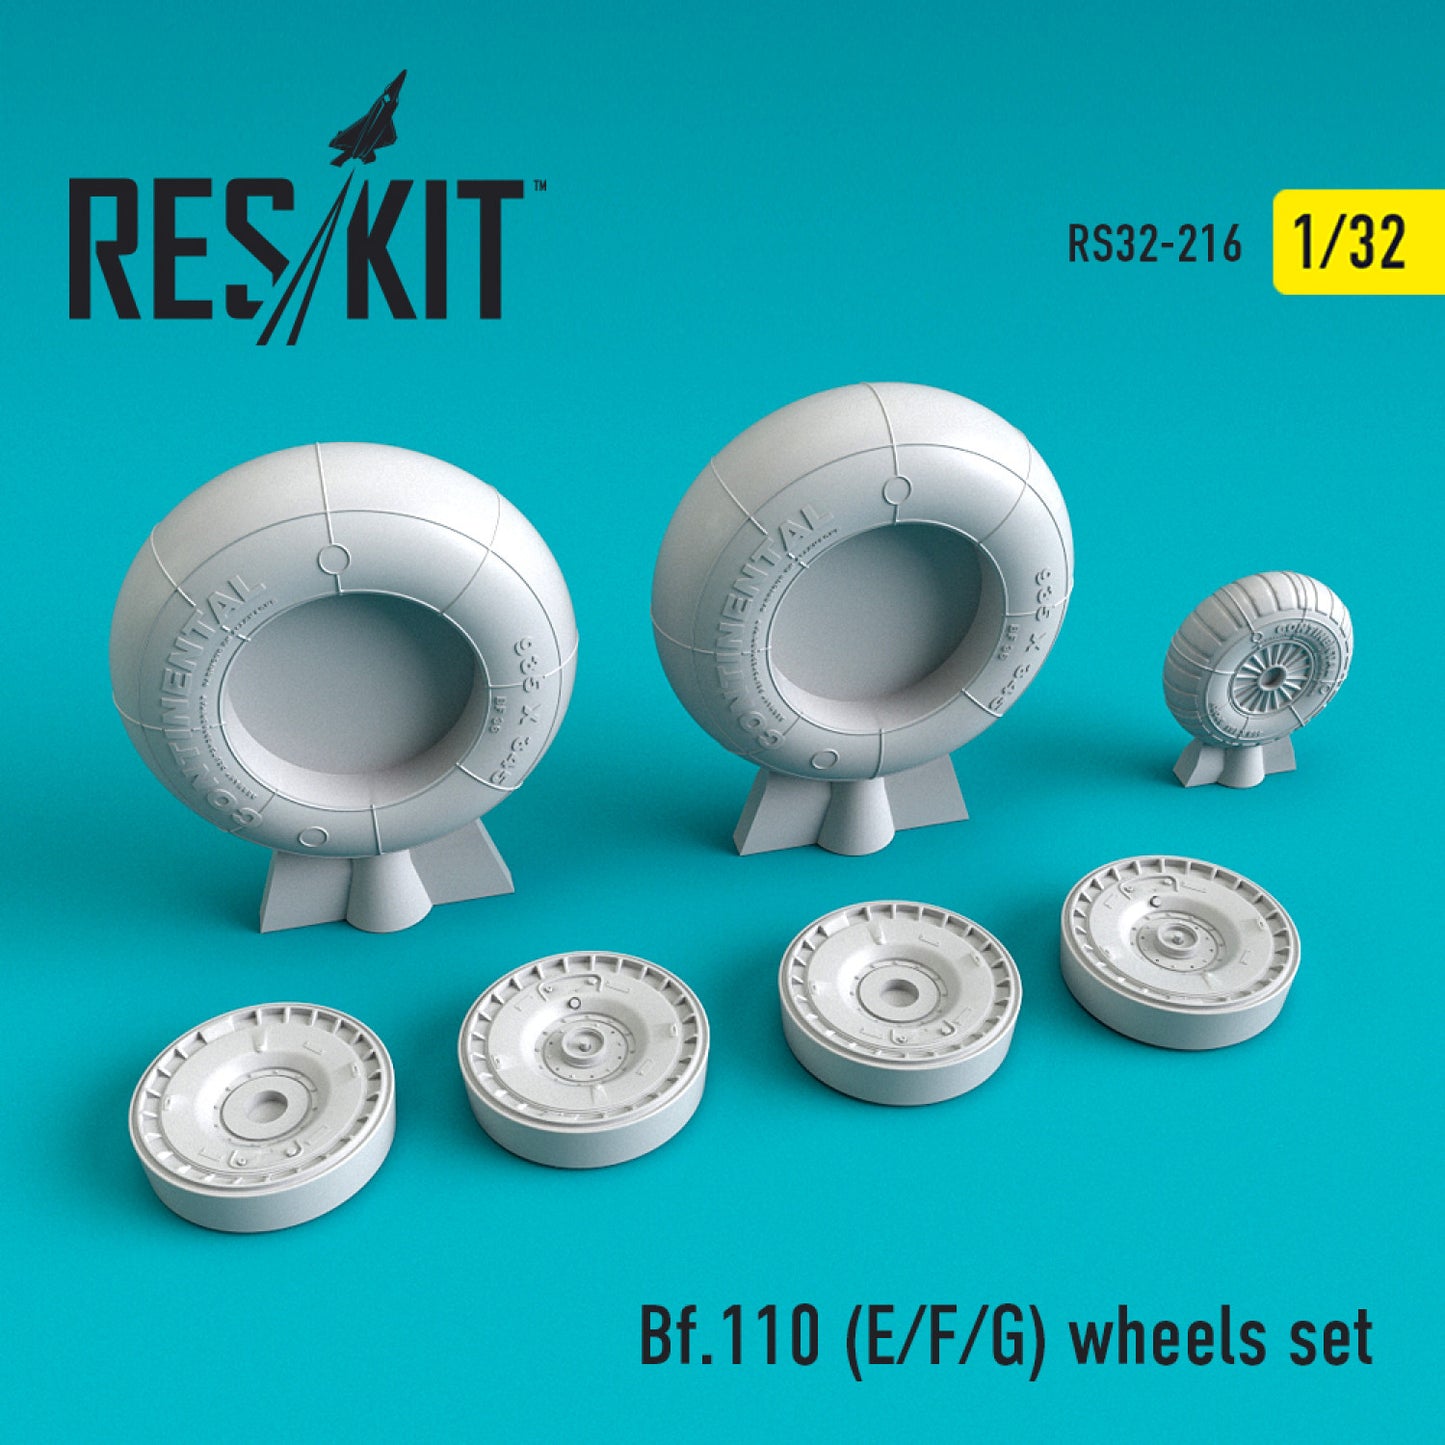 Res/Kit 1:32 Bf.110 (E/F/G) Wheels Set